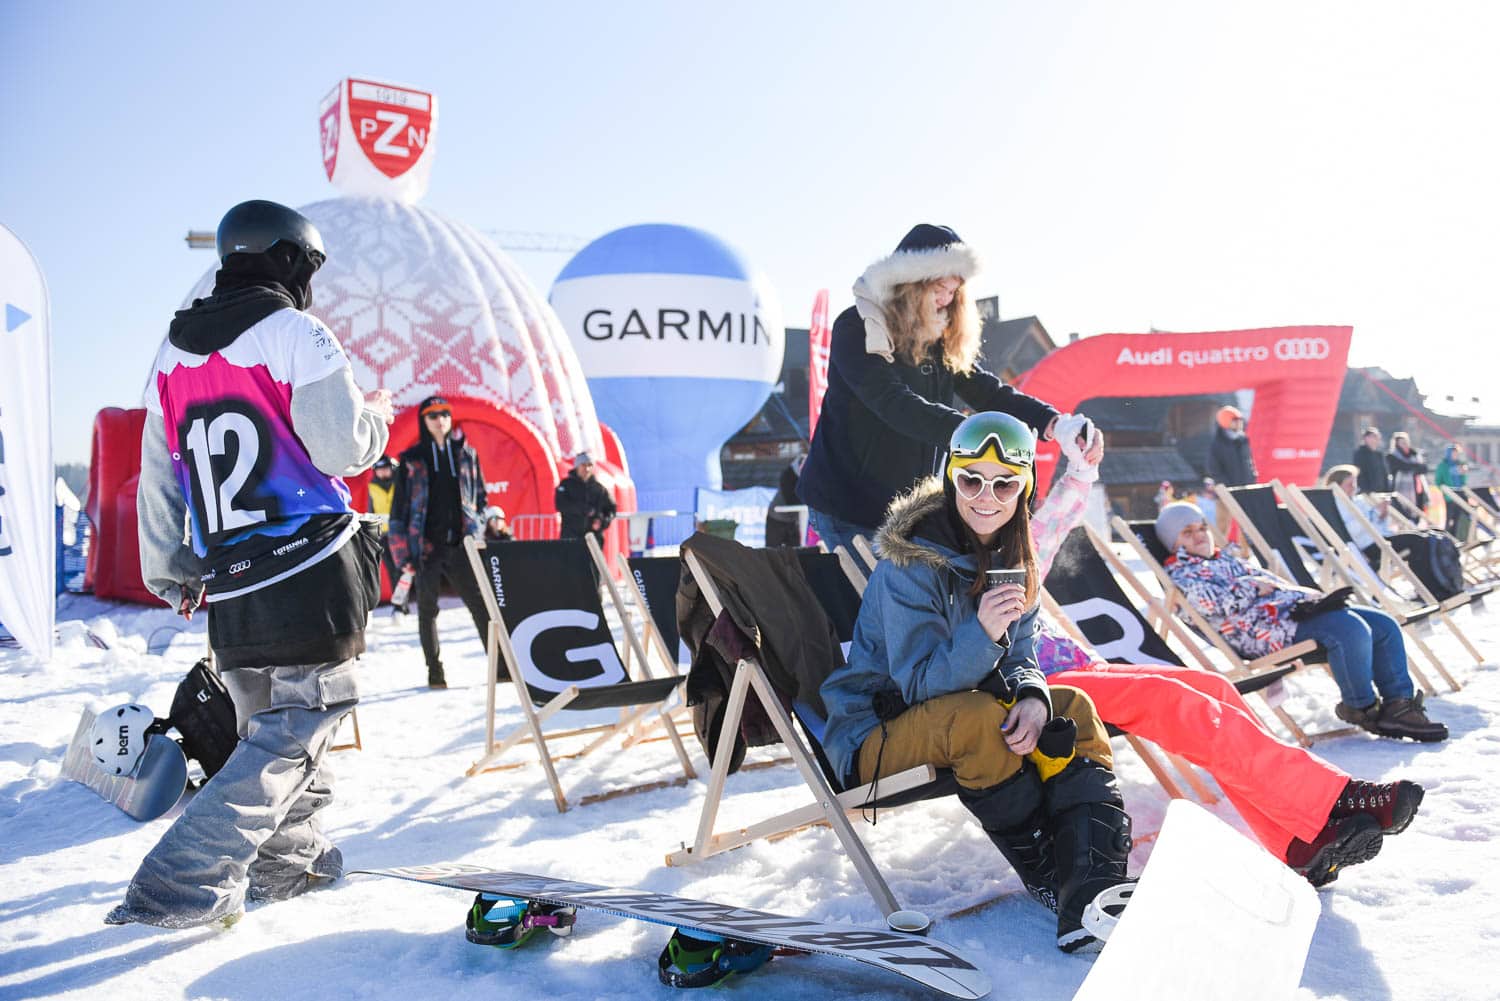 Garmin Winter Sports Festival 2019